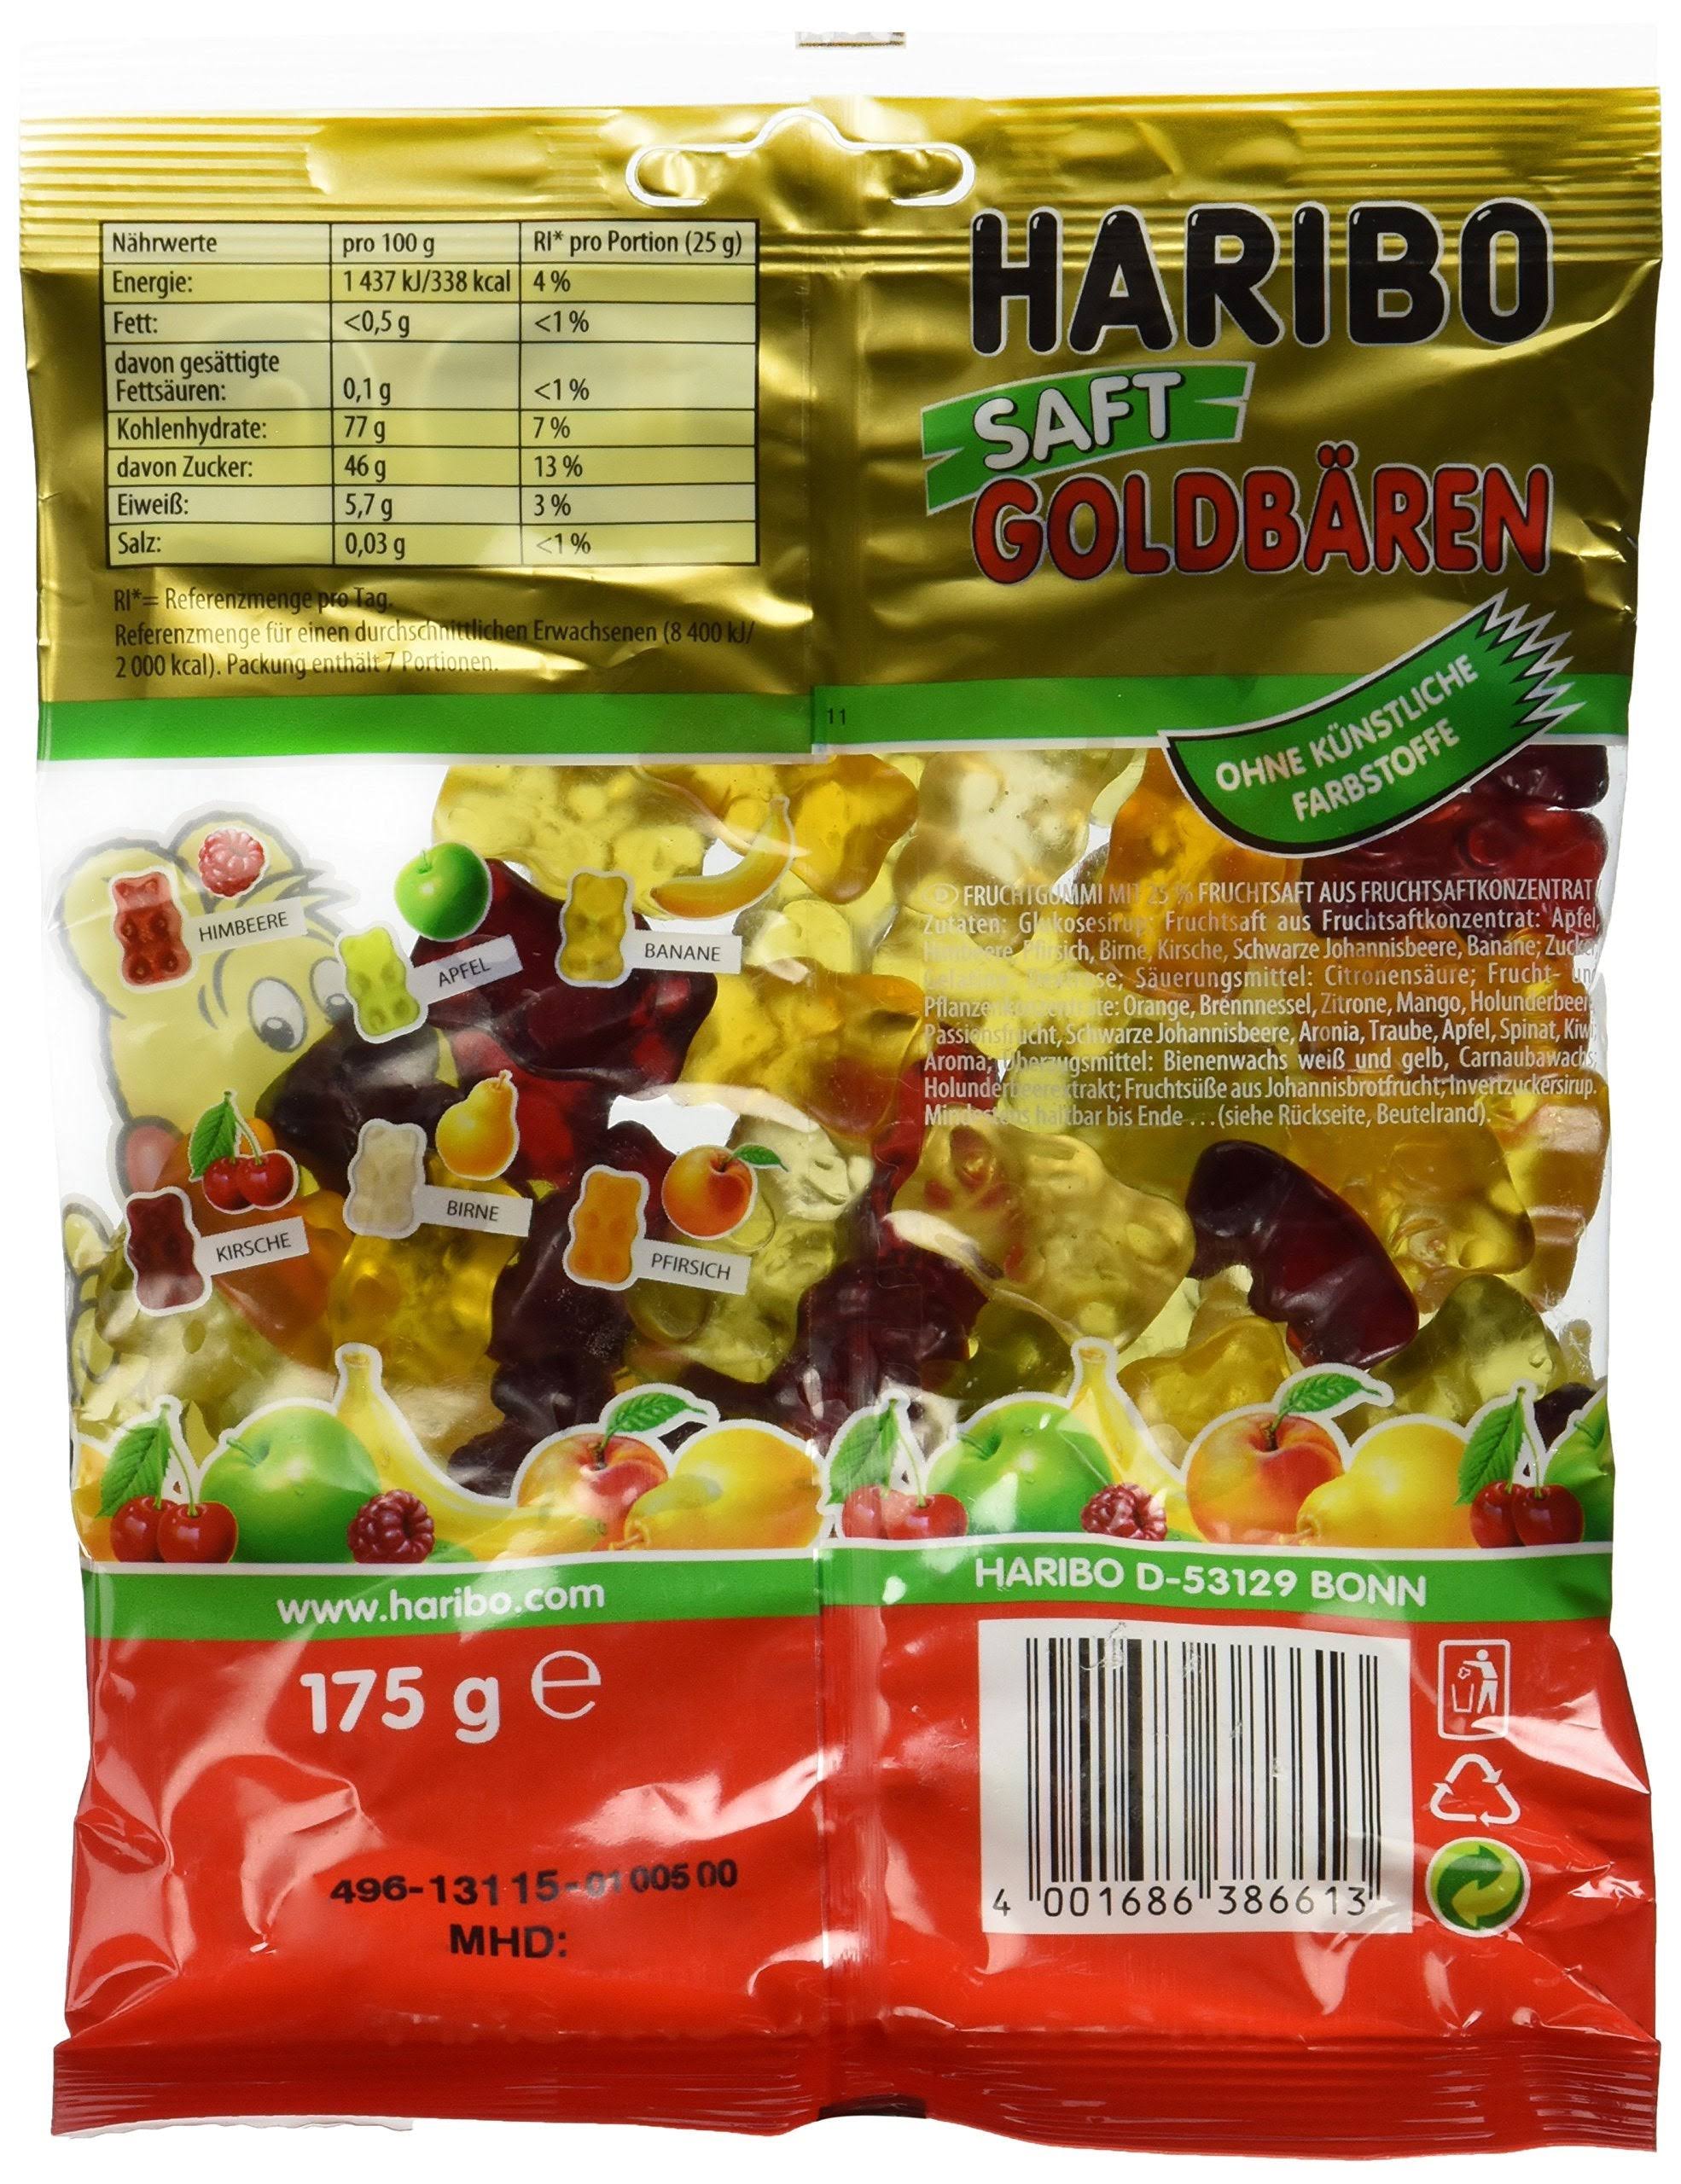 Haribo Golden Teddy Bears Fruit - 175g, with Juice Jellies